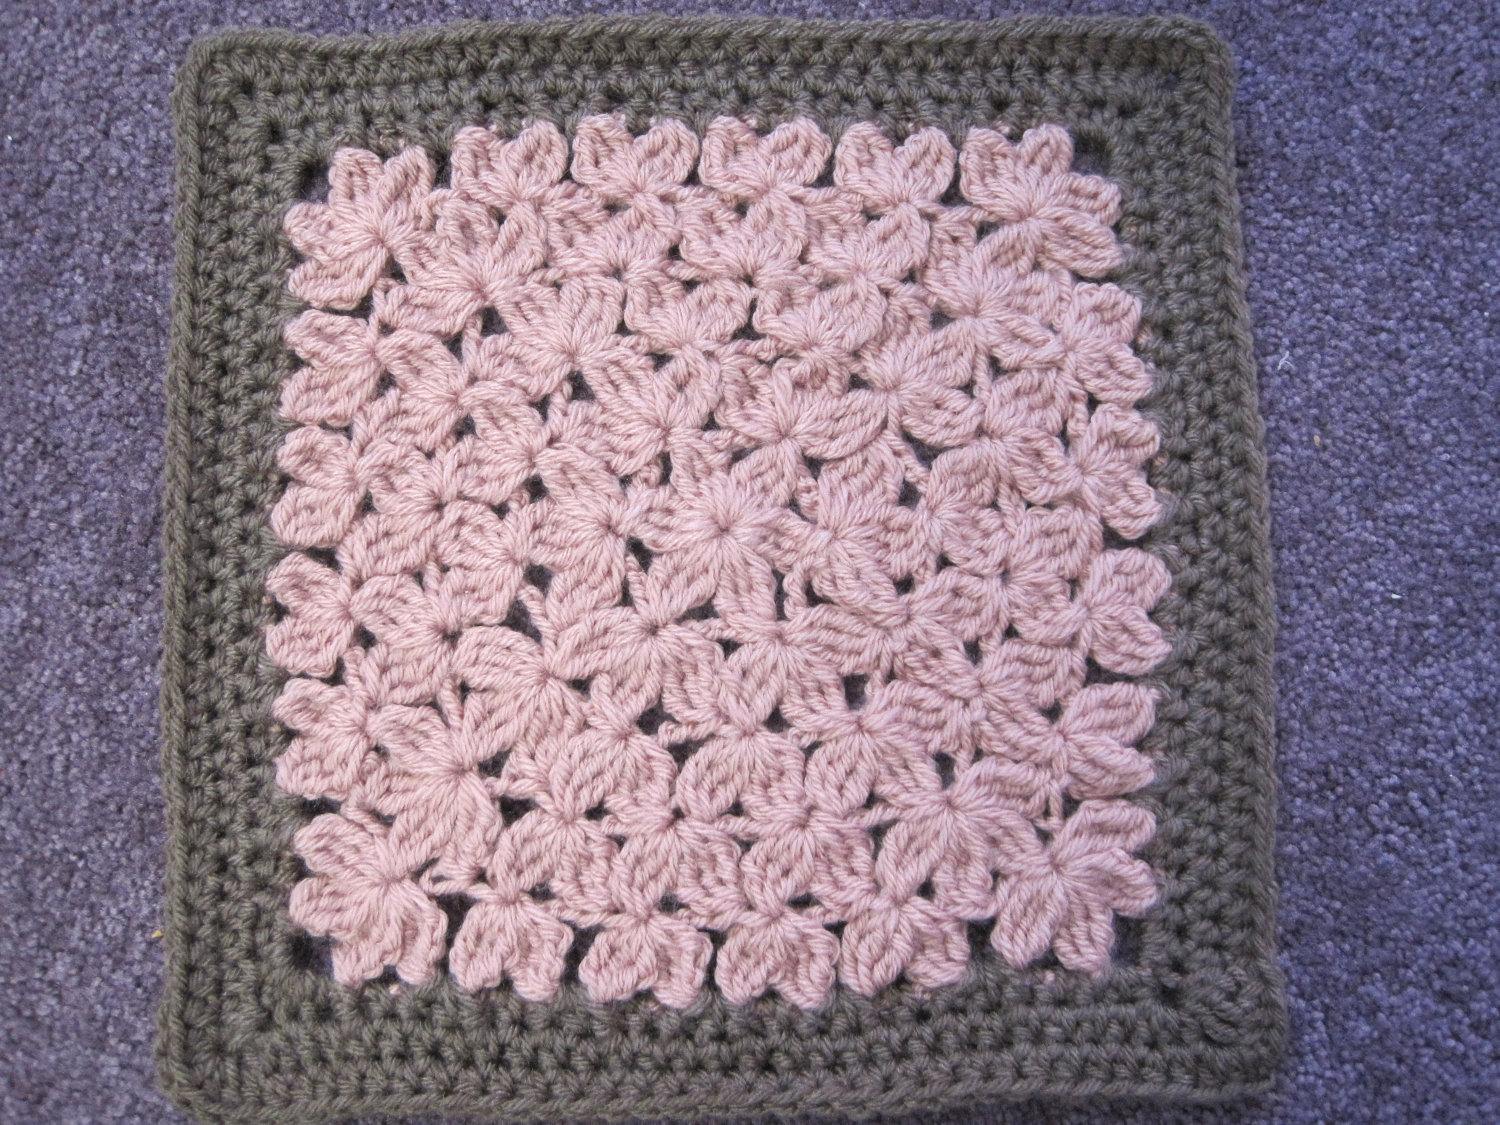 12 Granny Square Crochet Pattern In Treble Crochet Pattern For 12 Afghan Square Etsy